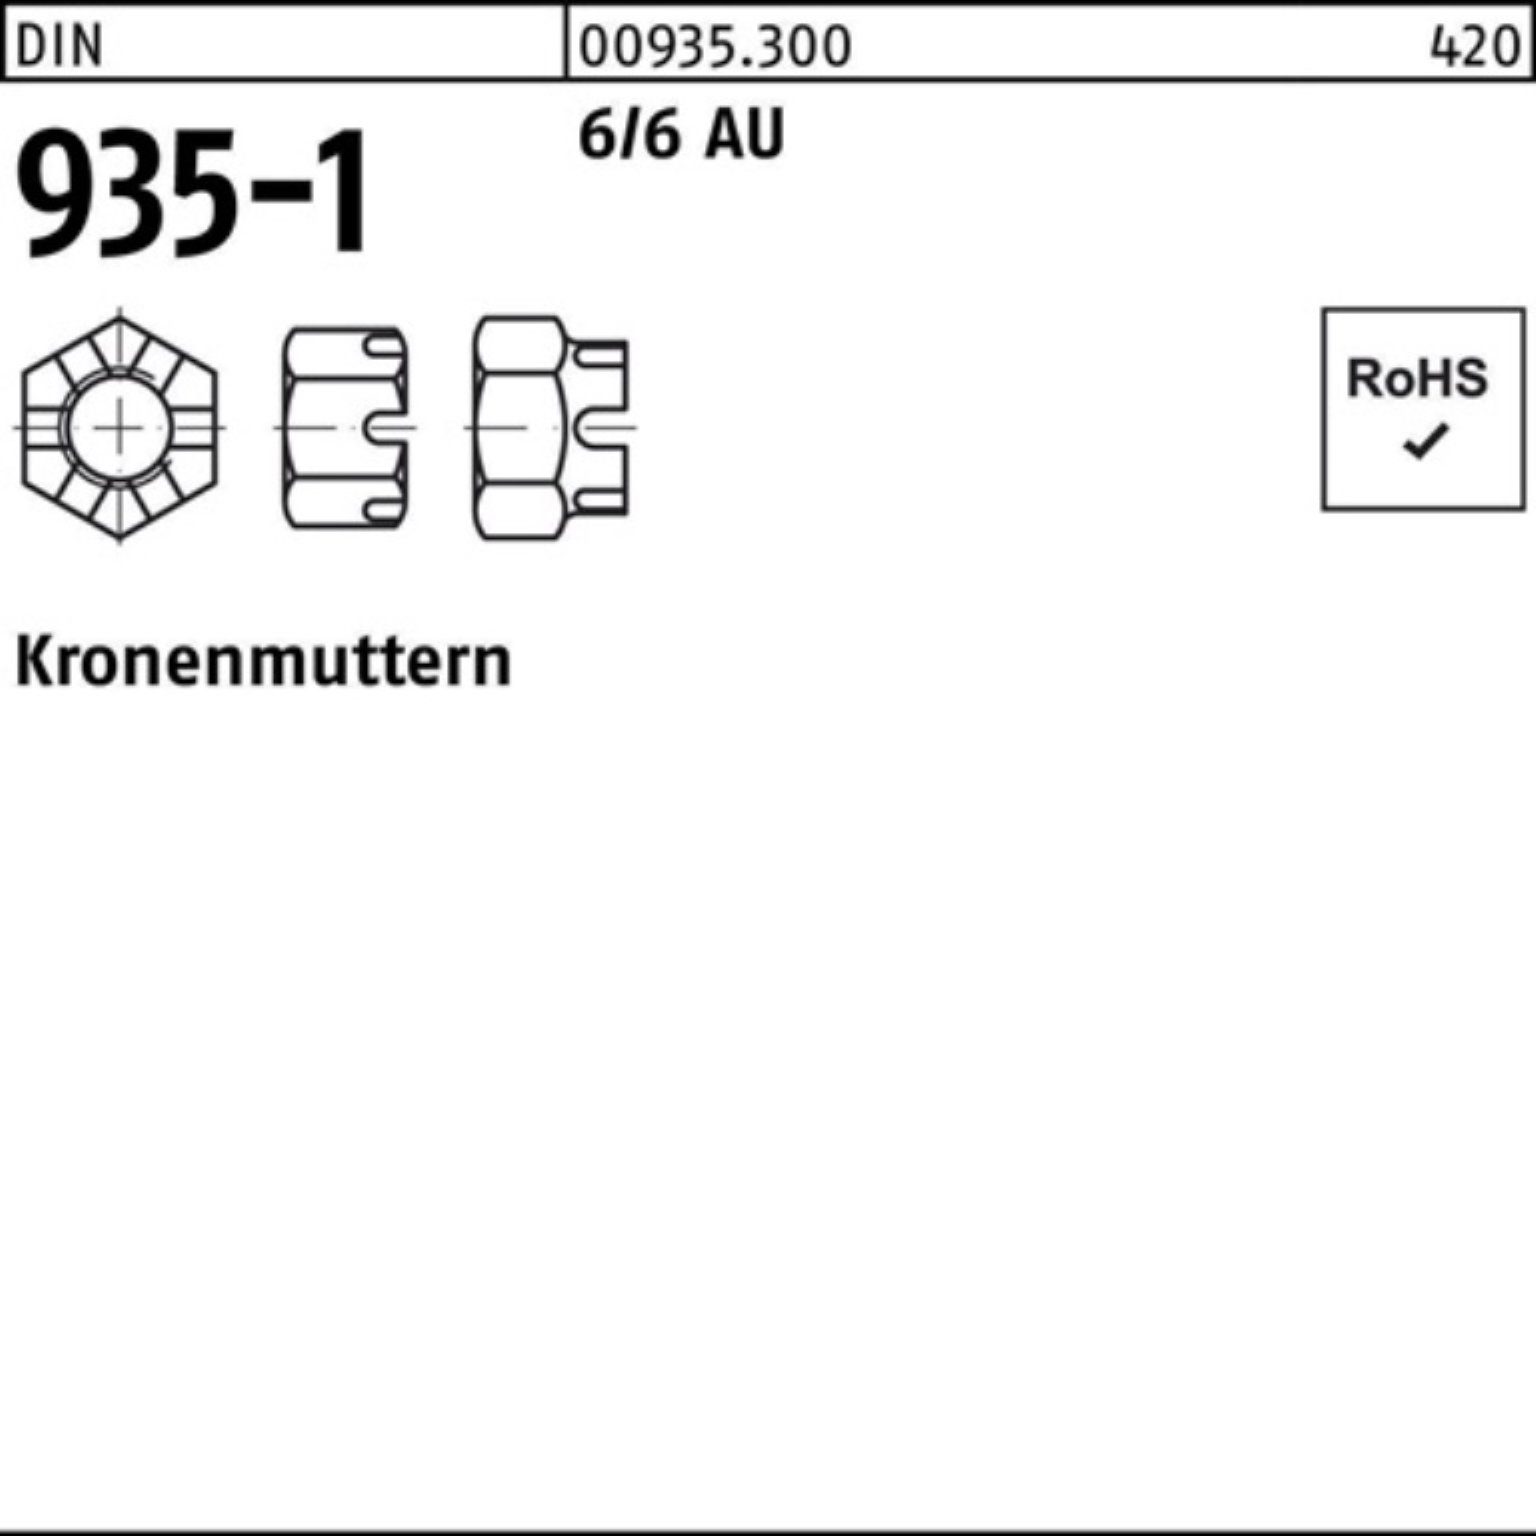 Reyher Kronenmutter 250er Pack Automatenstahl DIN 935-1 DI 250 Kronenmutter 6/6 M16 Stück